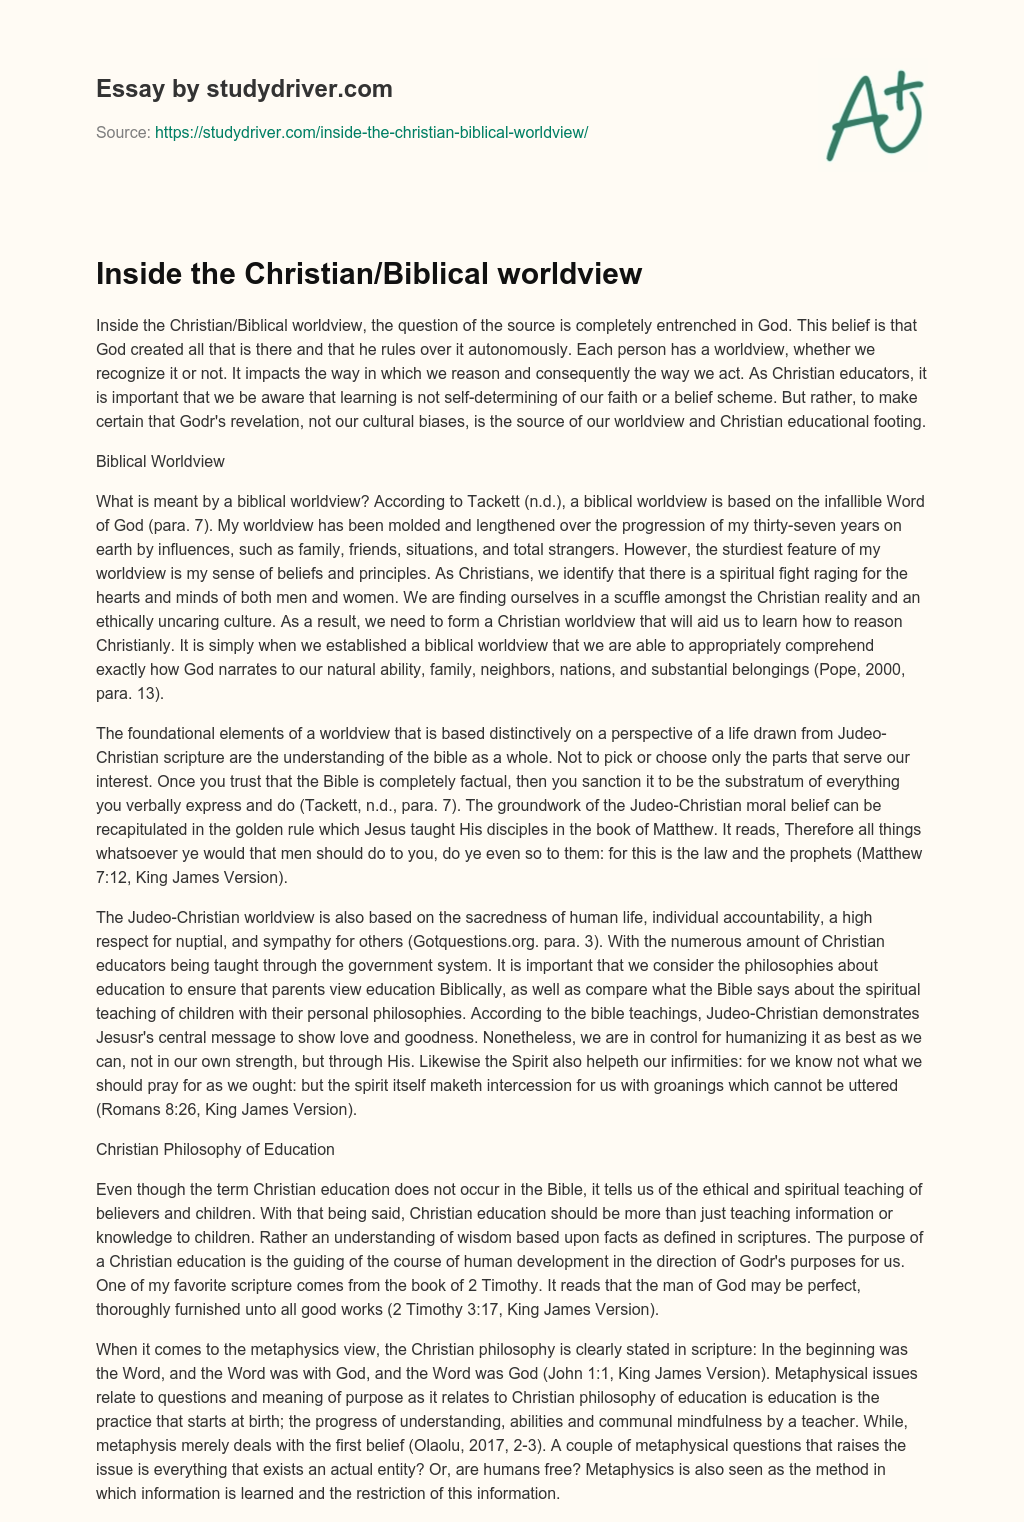 Inside the Christian/Biblical Worldview essay